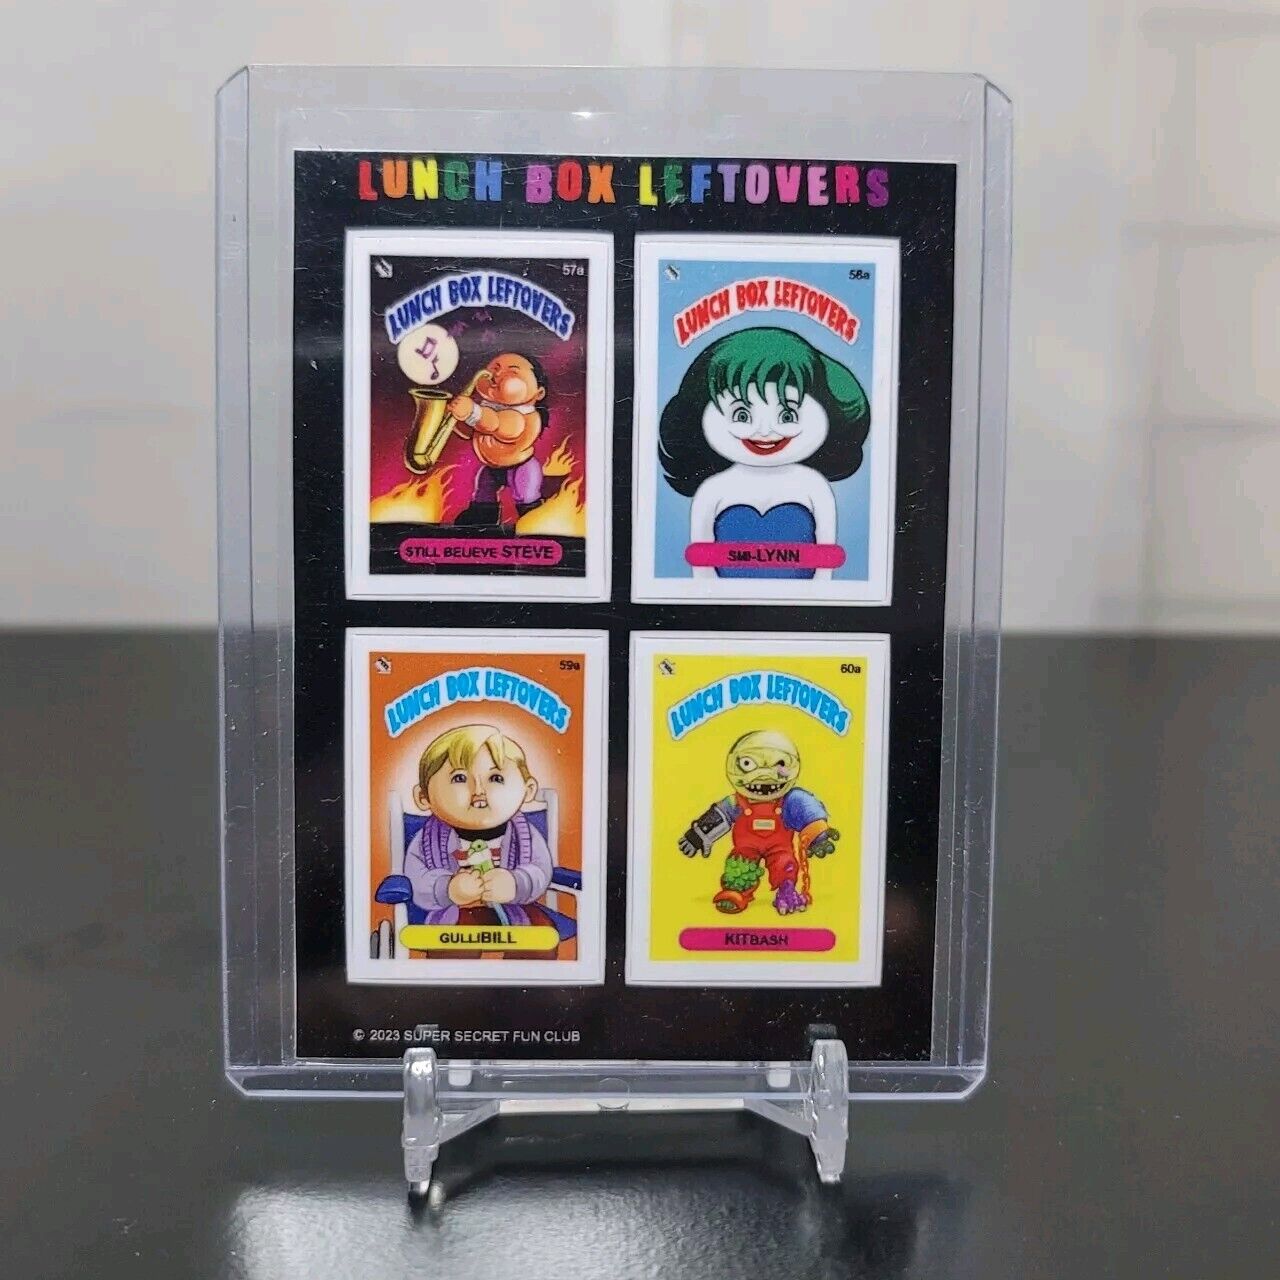 Rare Super Secret Fun Club Series 3 Lunchbox Leftovers Mini Cards Chase Card